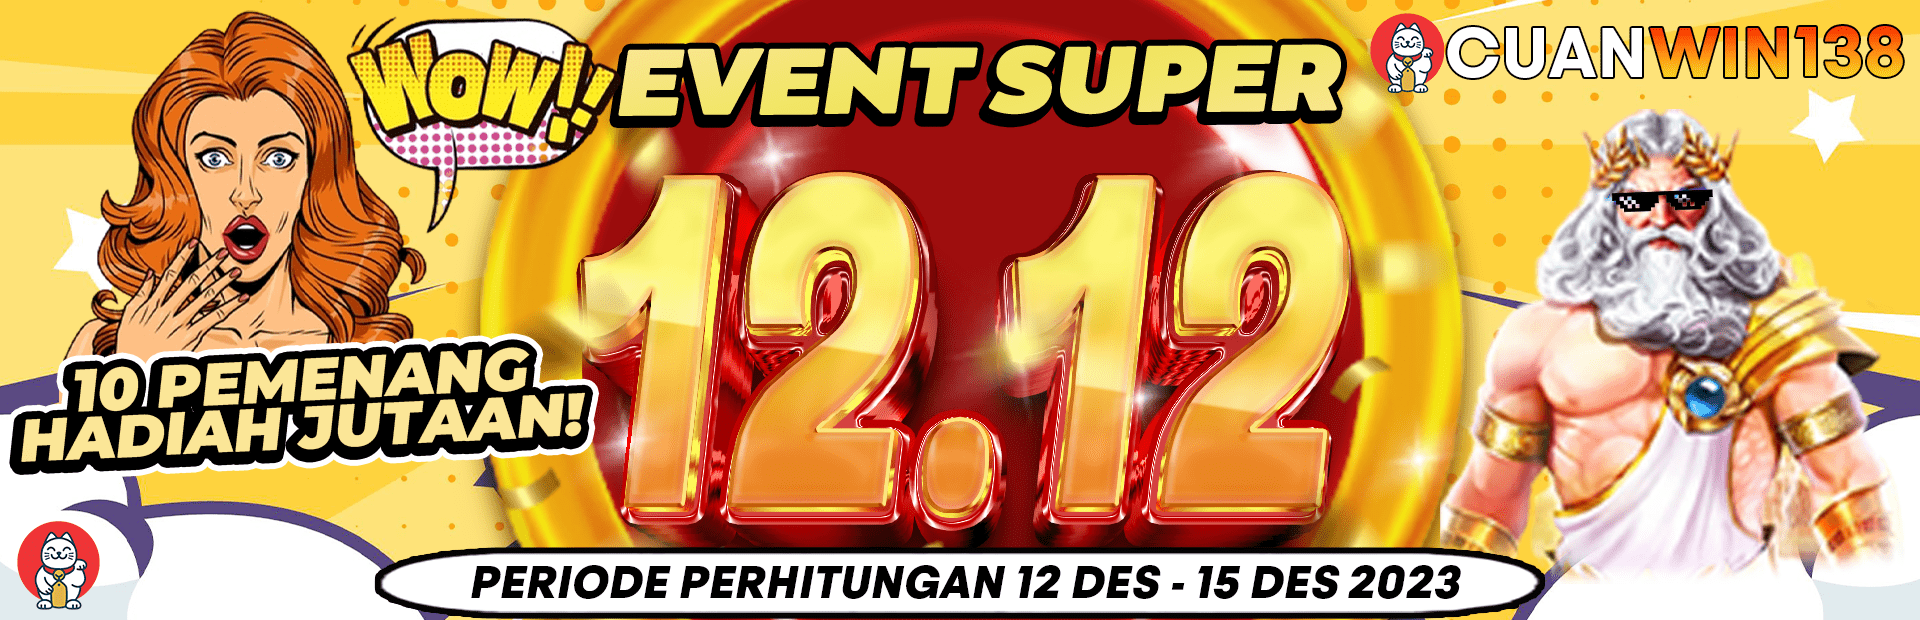 EVENT SUPER CUANWIN138